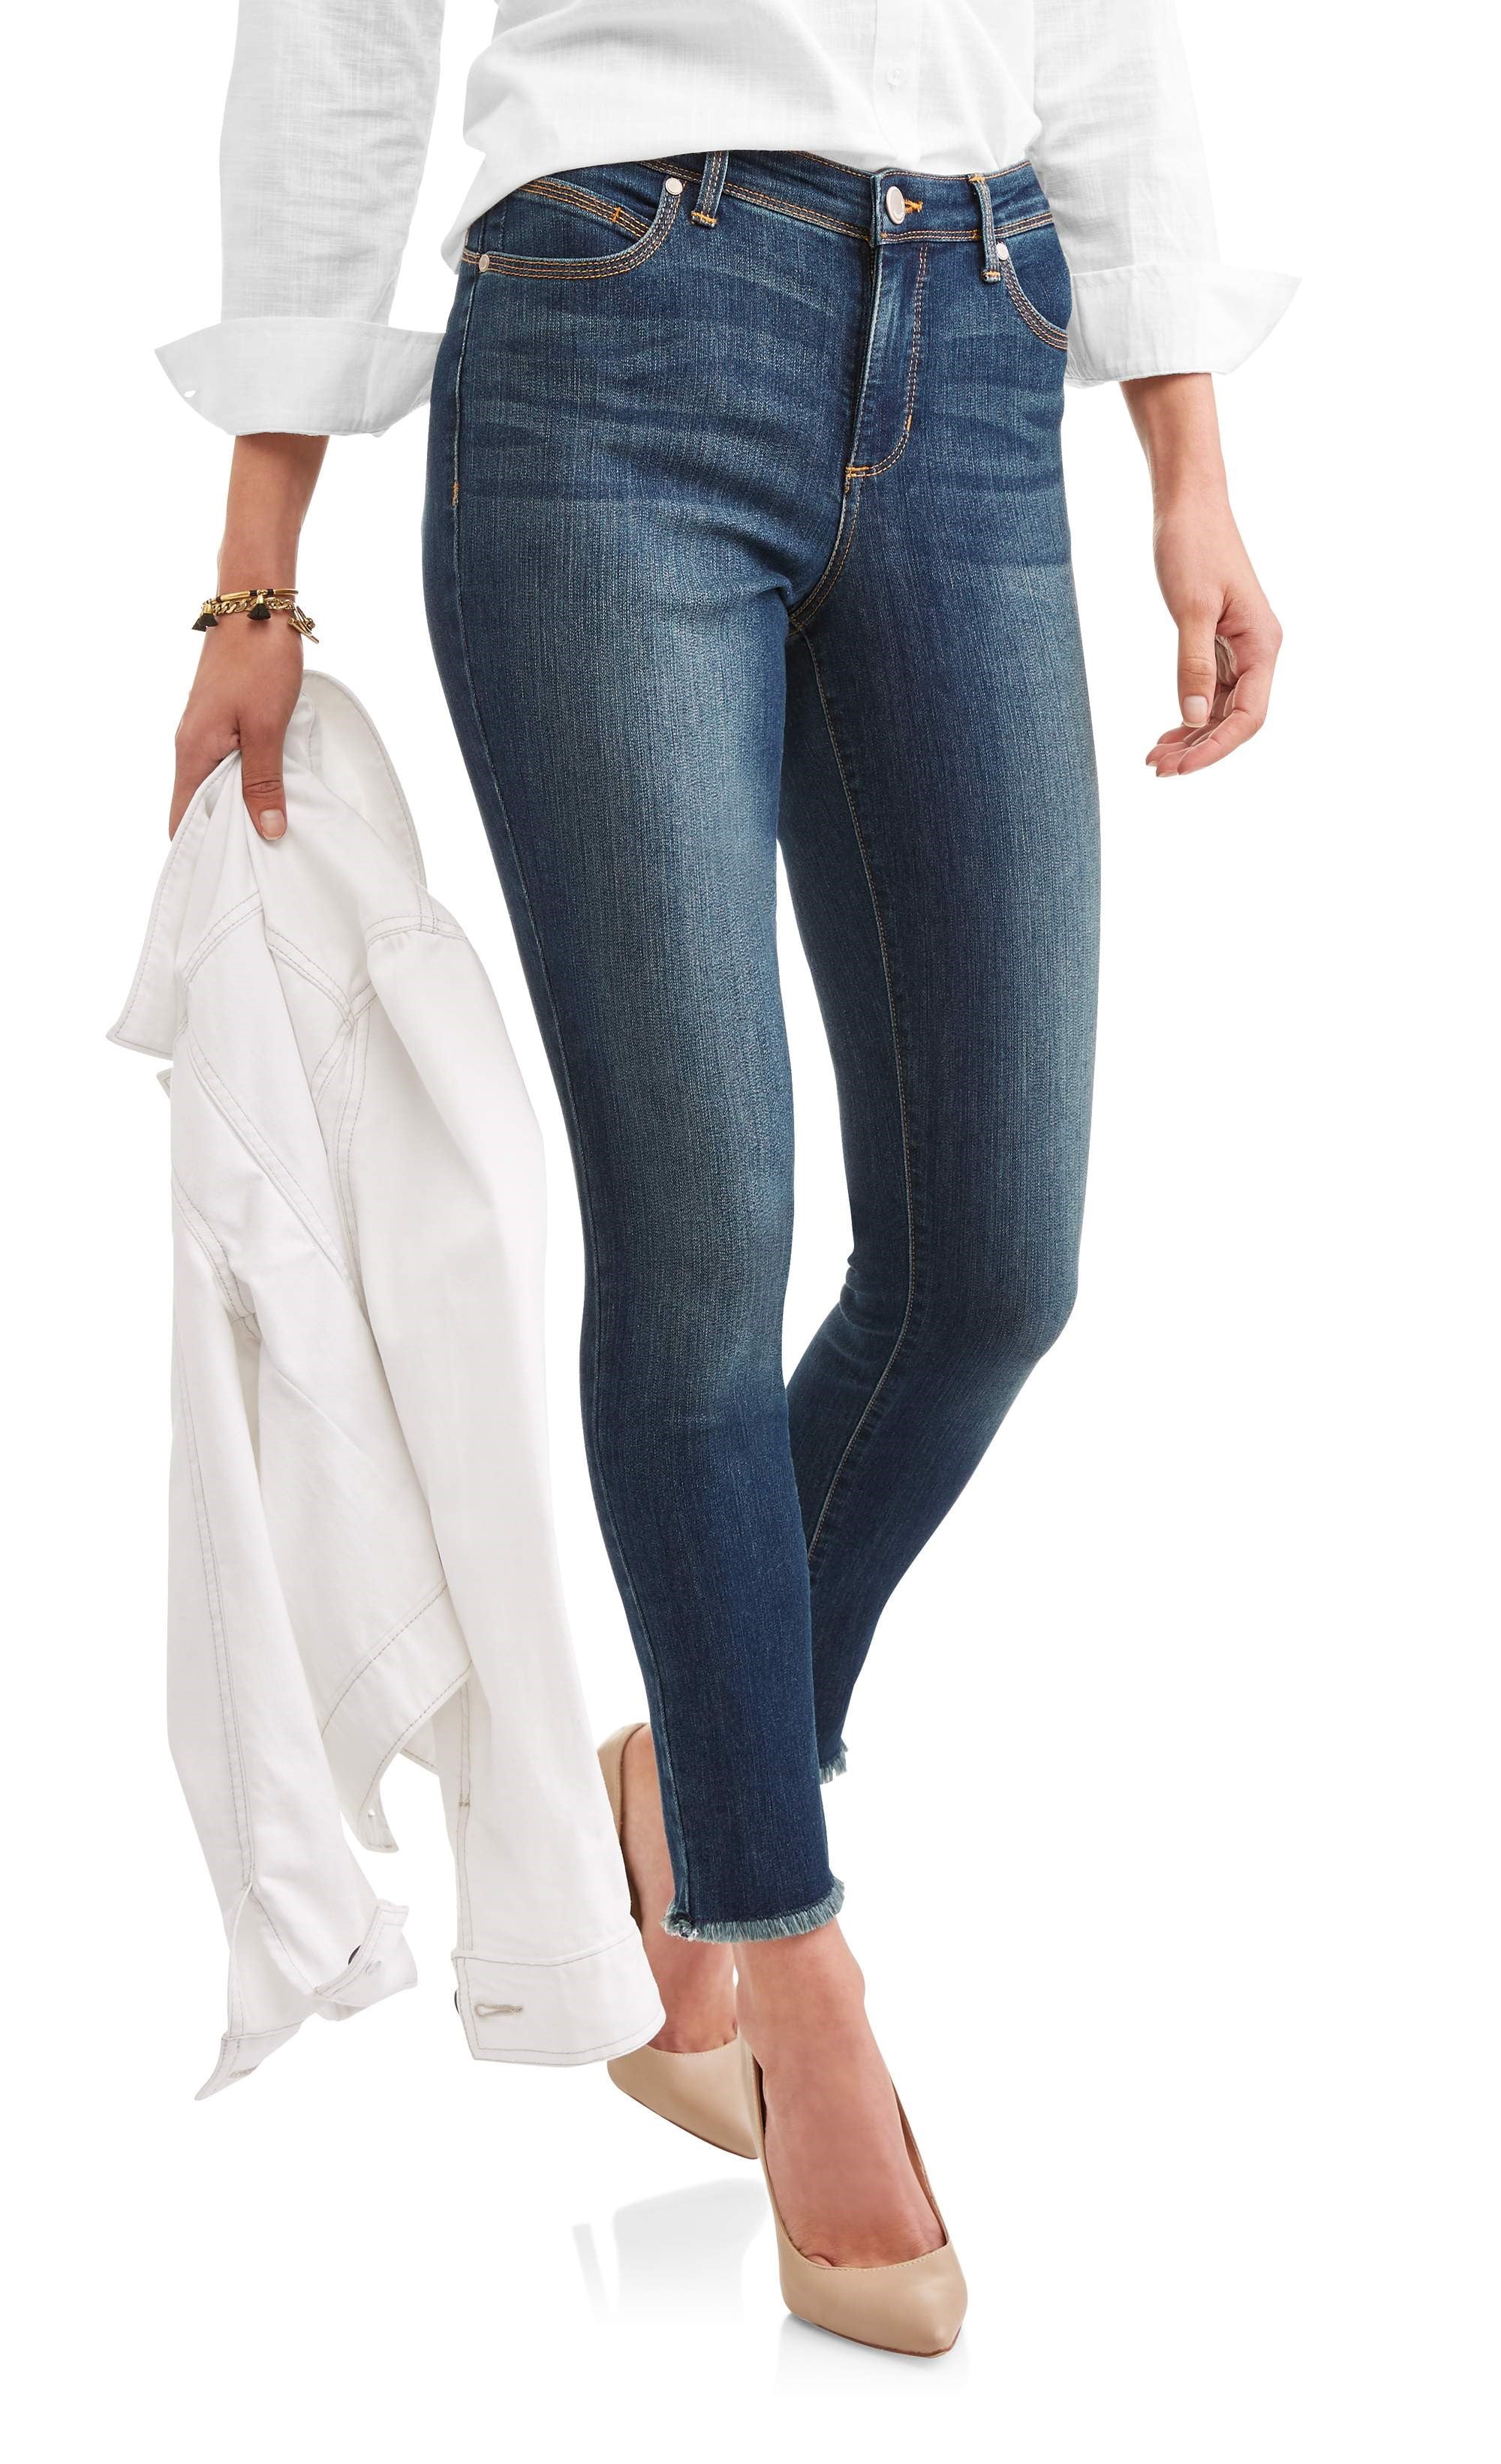 Bandolino - Women's Lisbeth Frayed Hem Jeans - Walmart.com